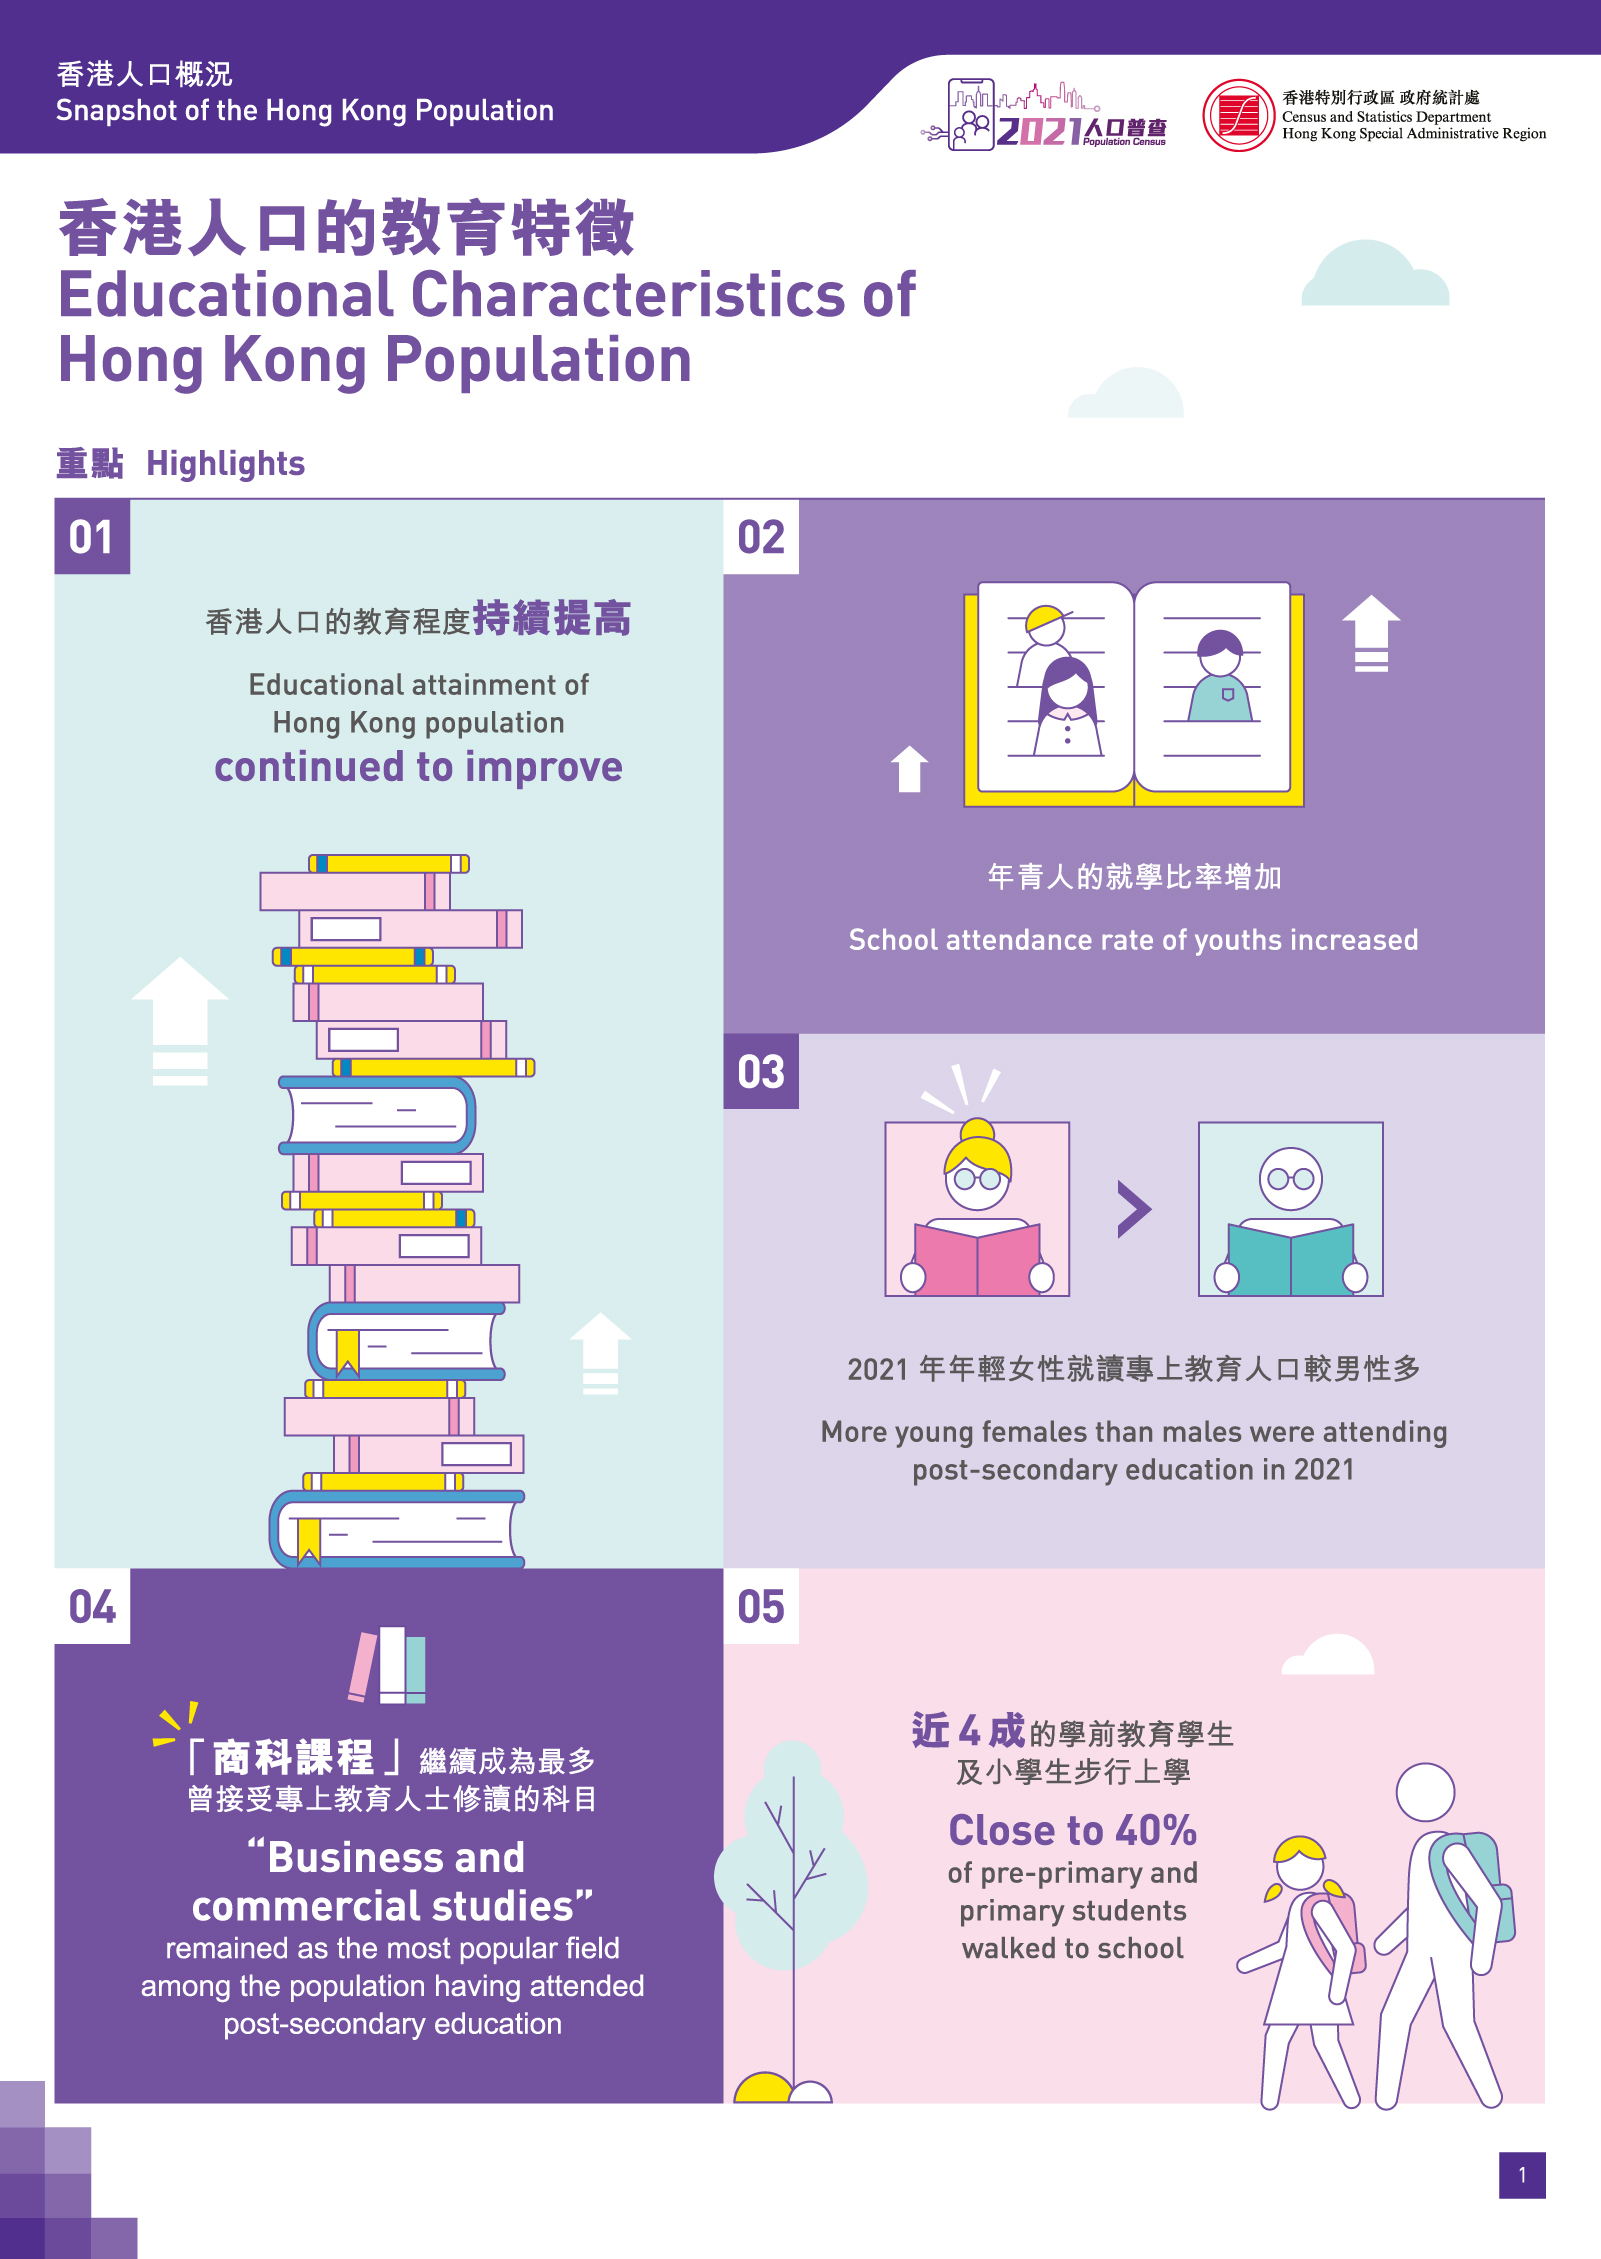 Educational Characteristics of Hong Kong Population